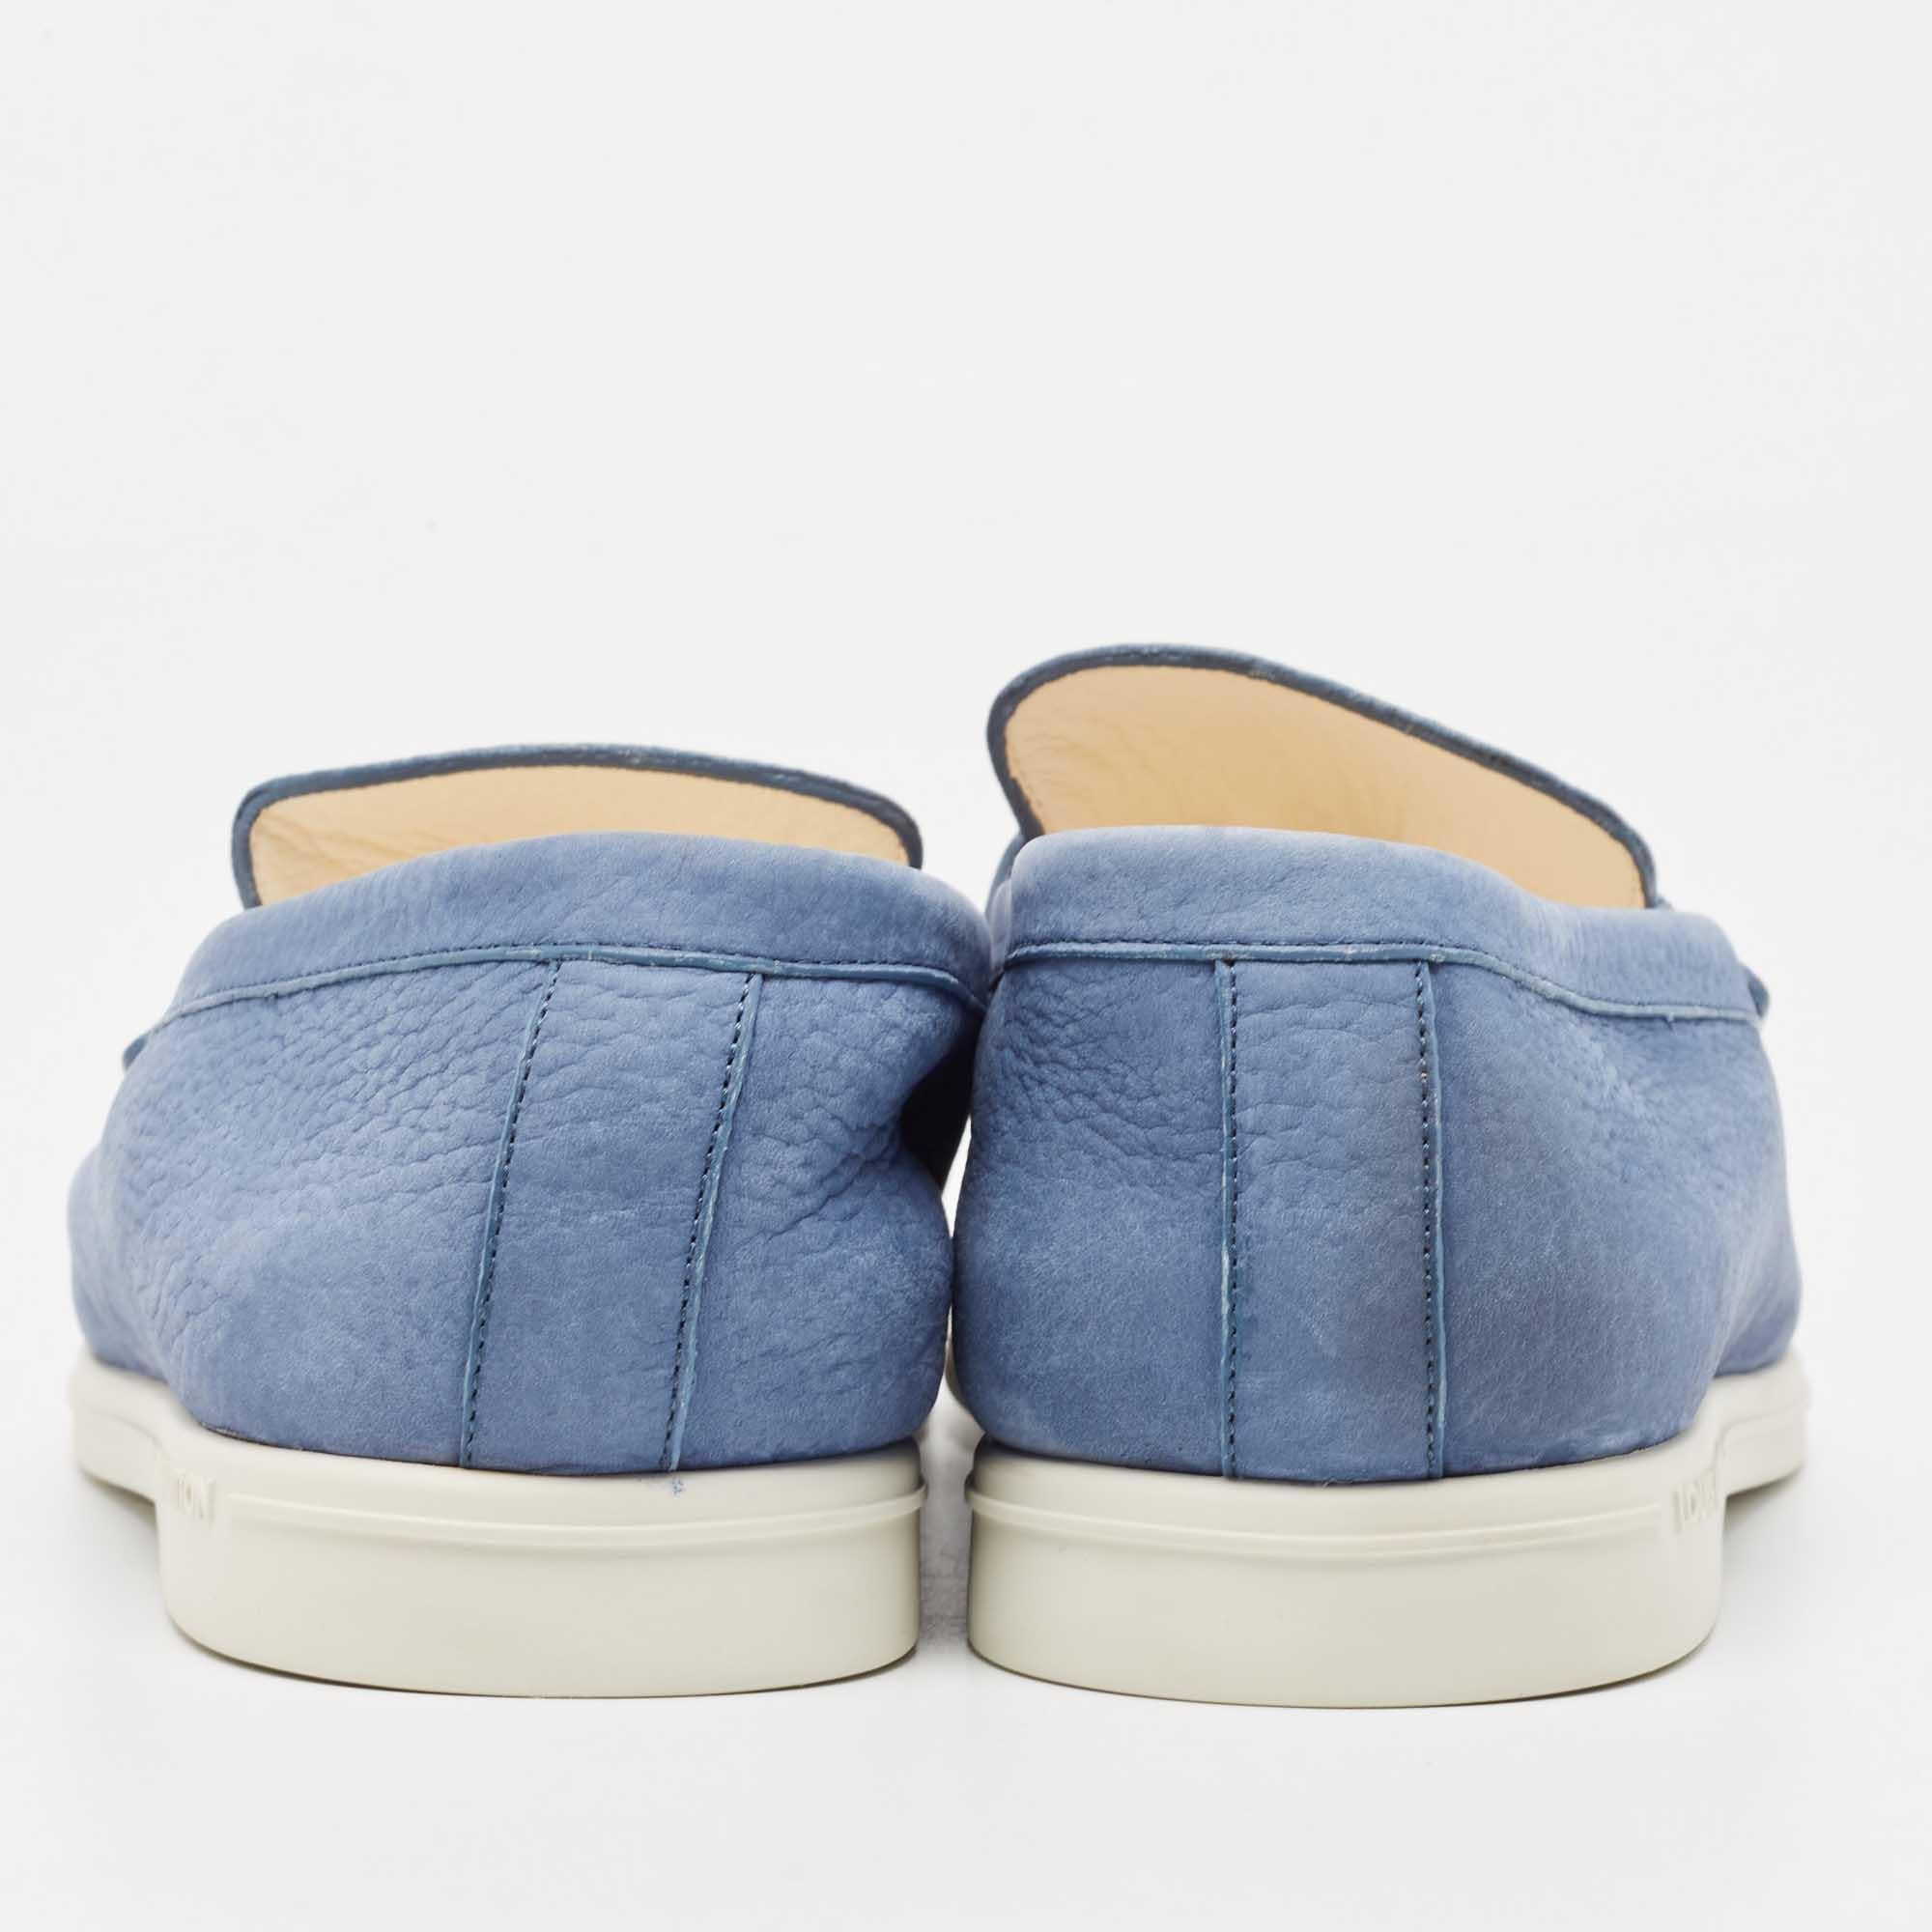 Louis Vuitton Blue Nubuck Leather Estate Loafers Size 42 2